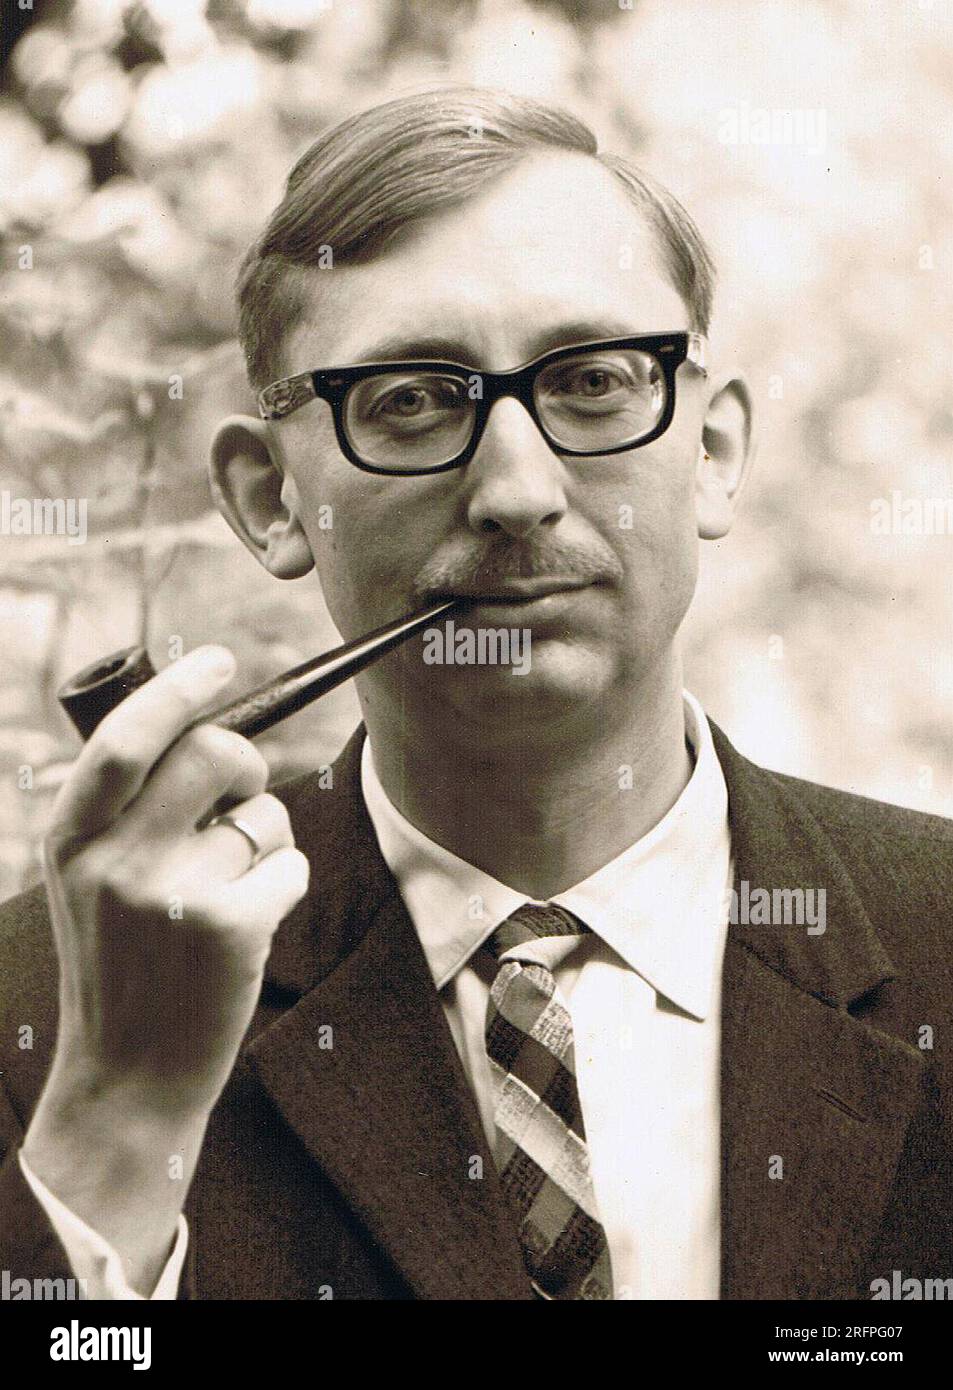 A thirty year old German man smoking a pipe. The photo was taken around 1961 Stock Photo